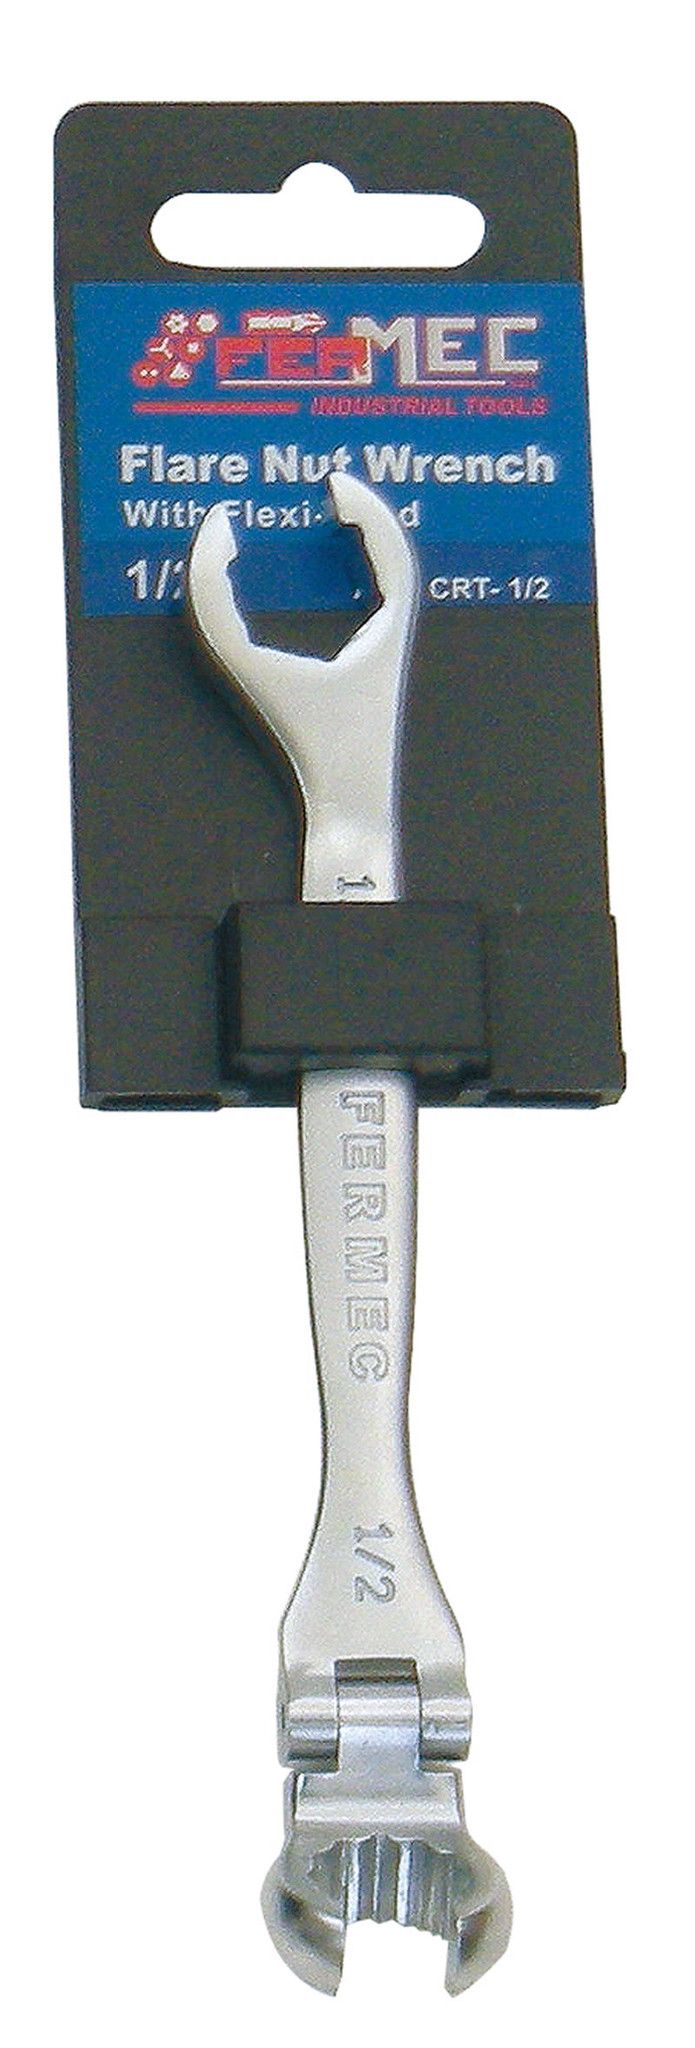 Chiave snodata mm 17 esagonale e poligonale per raccordi FERMEC CRT-17